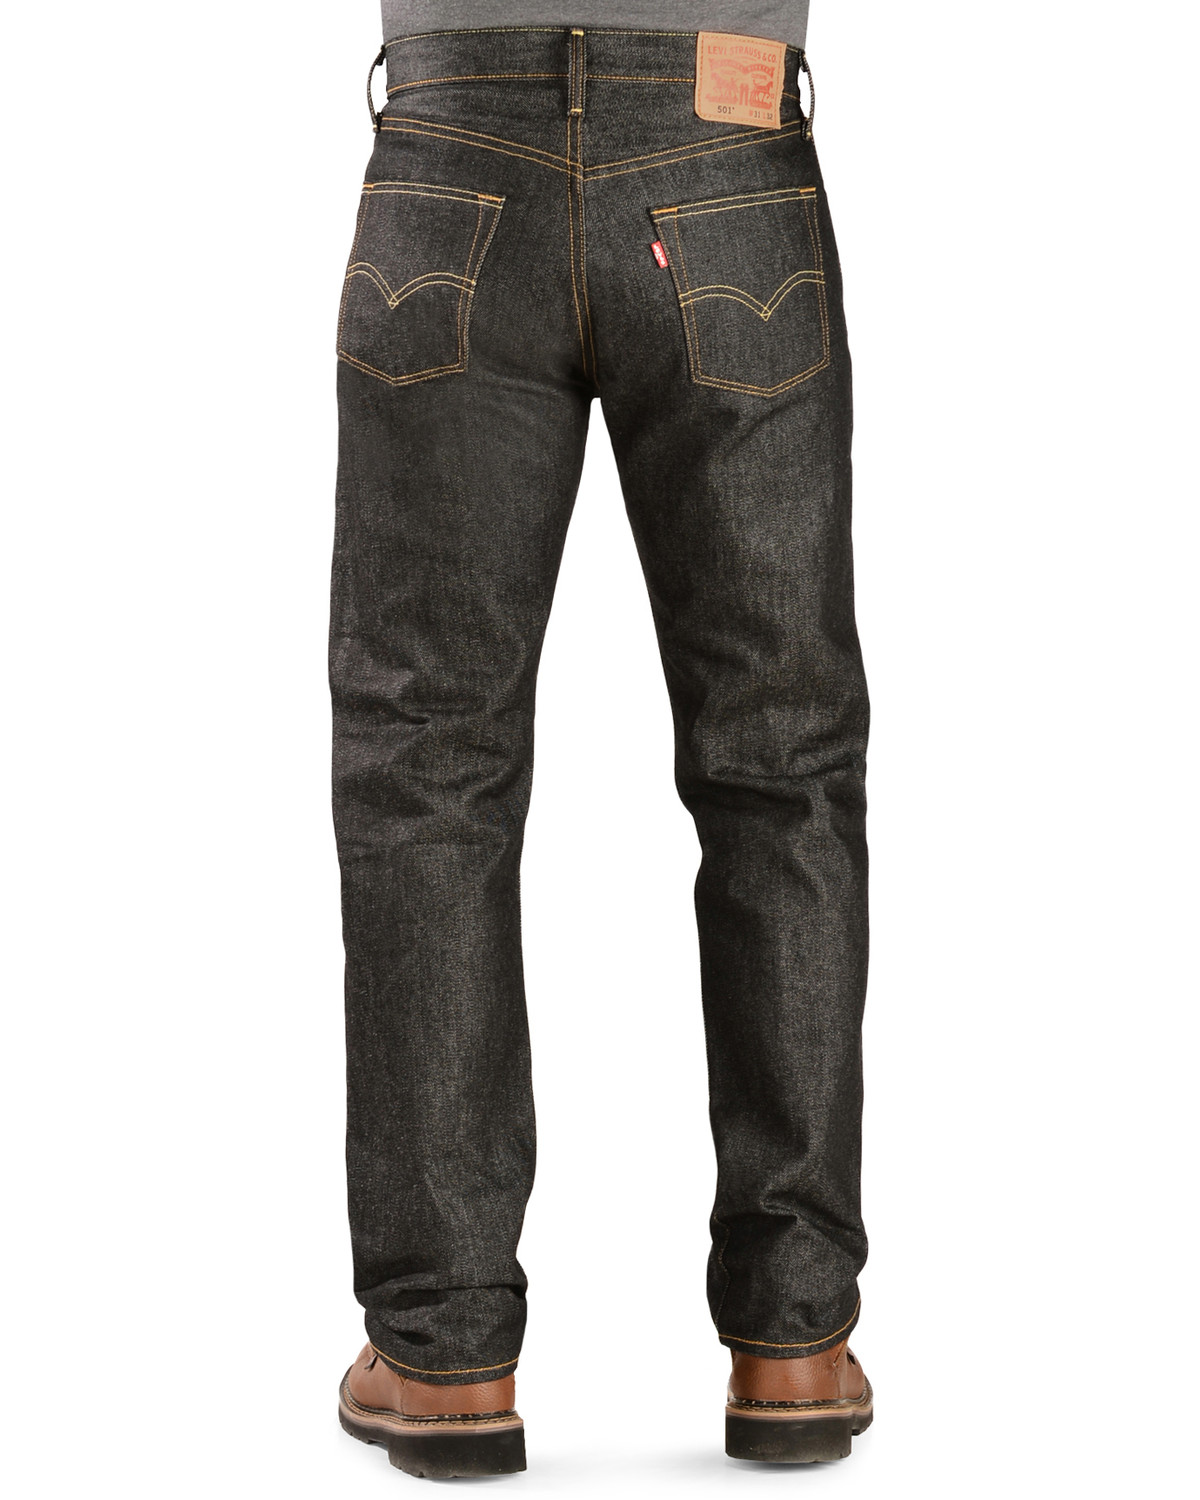 Levi's 501 Jeans - Original Shrink-to-Fit | Sheplers